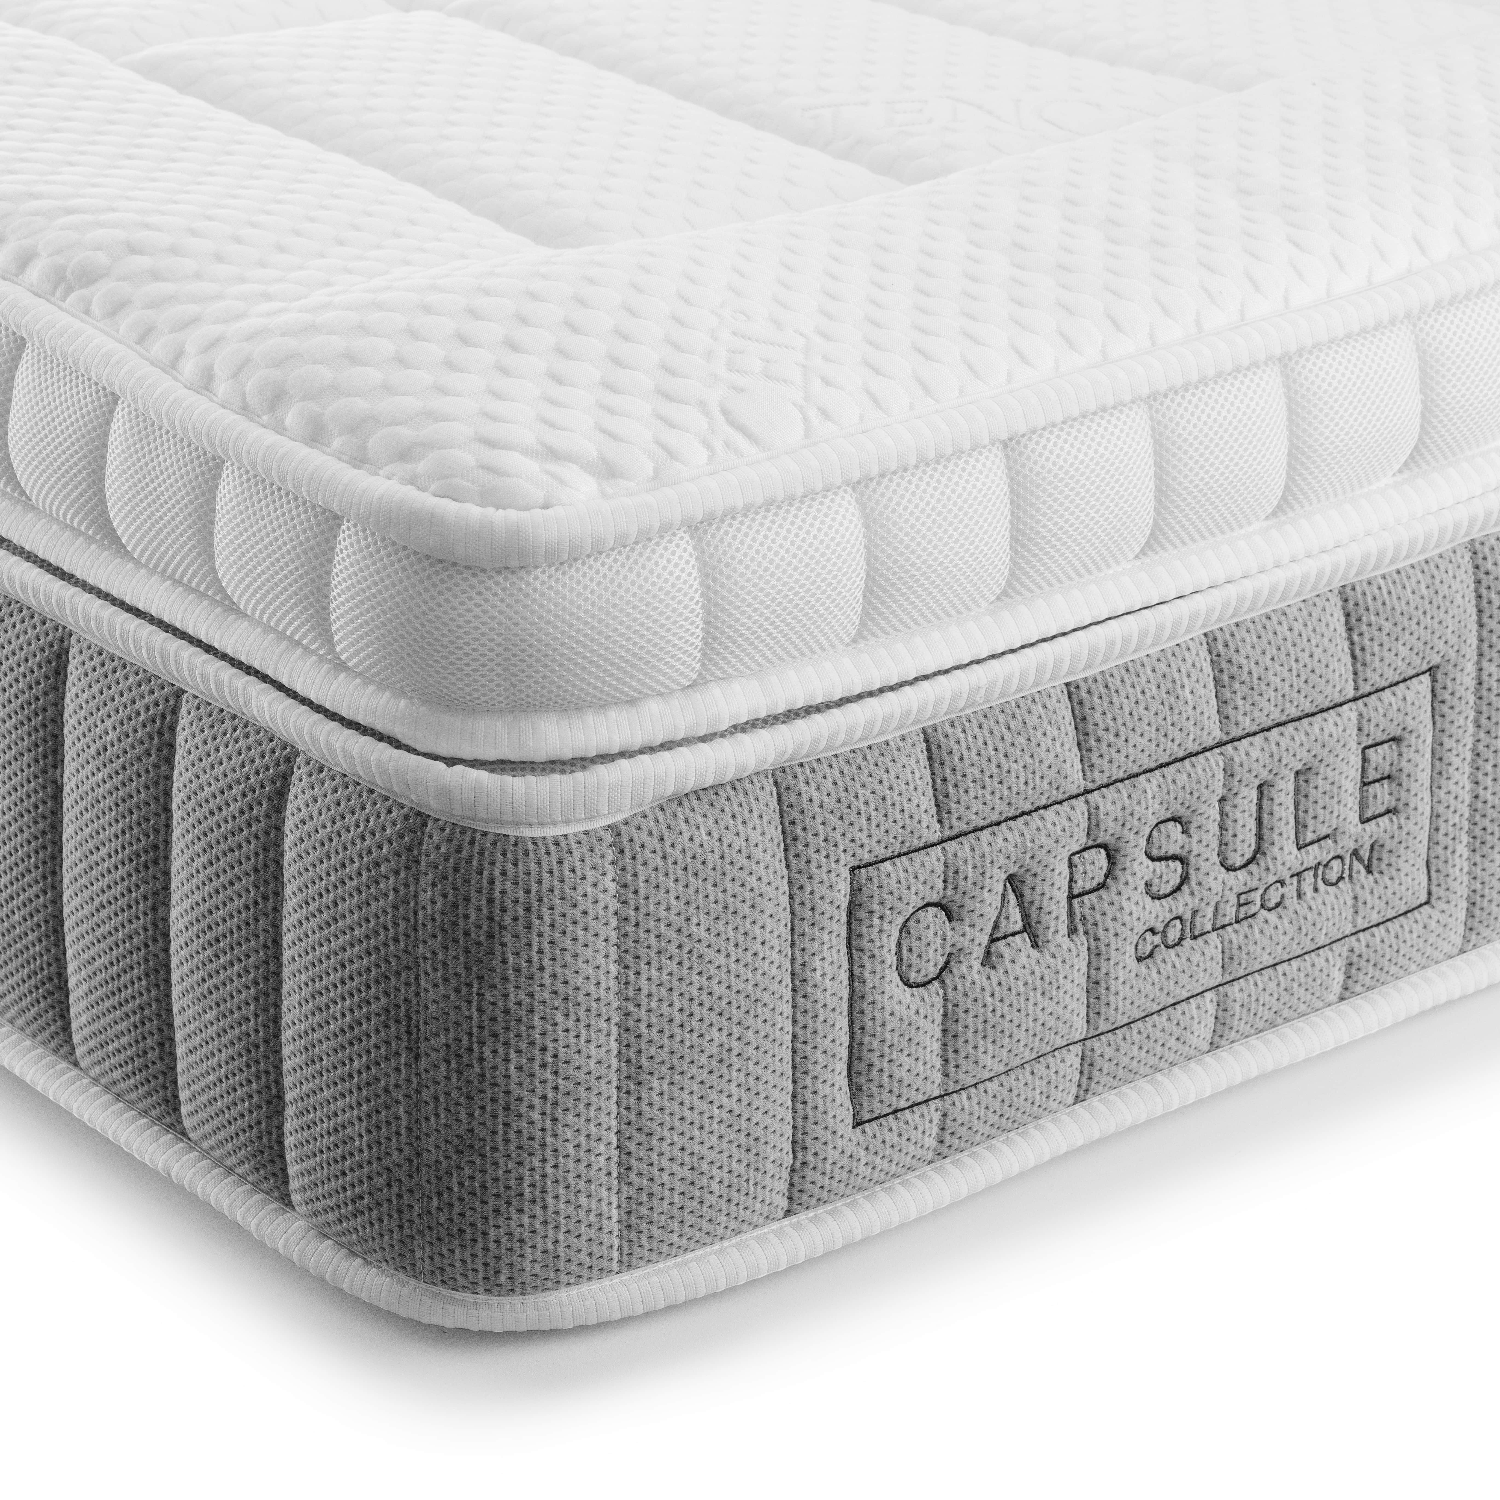 Photo of Double 2000 pocket sprung pillow top mattress - capsule - julian bowen